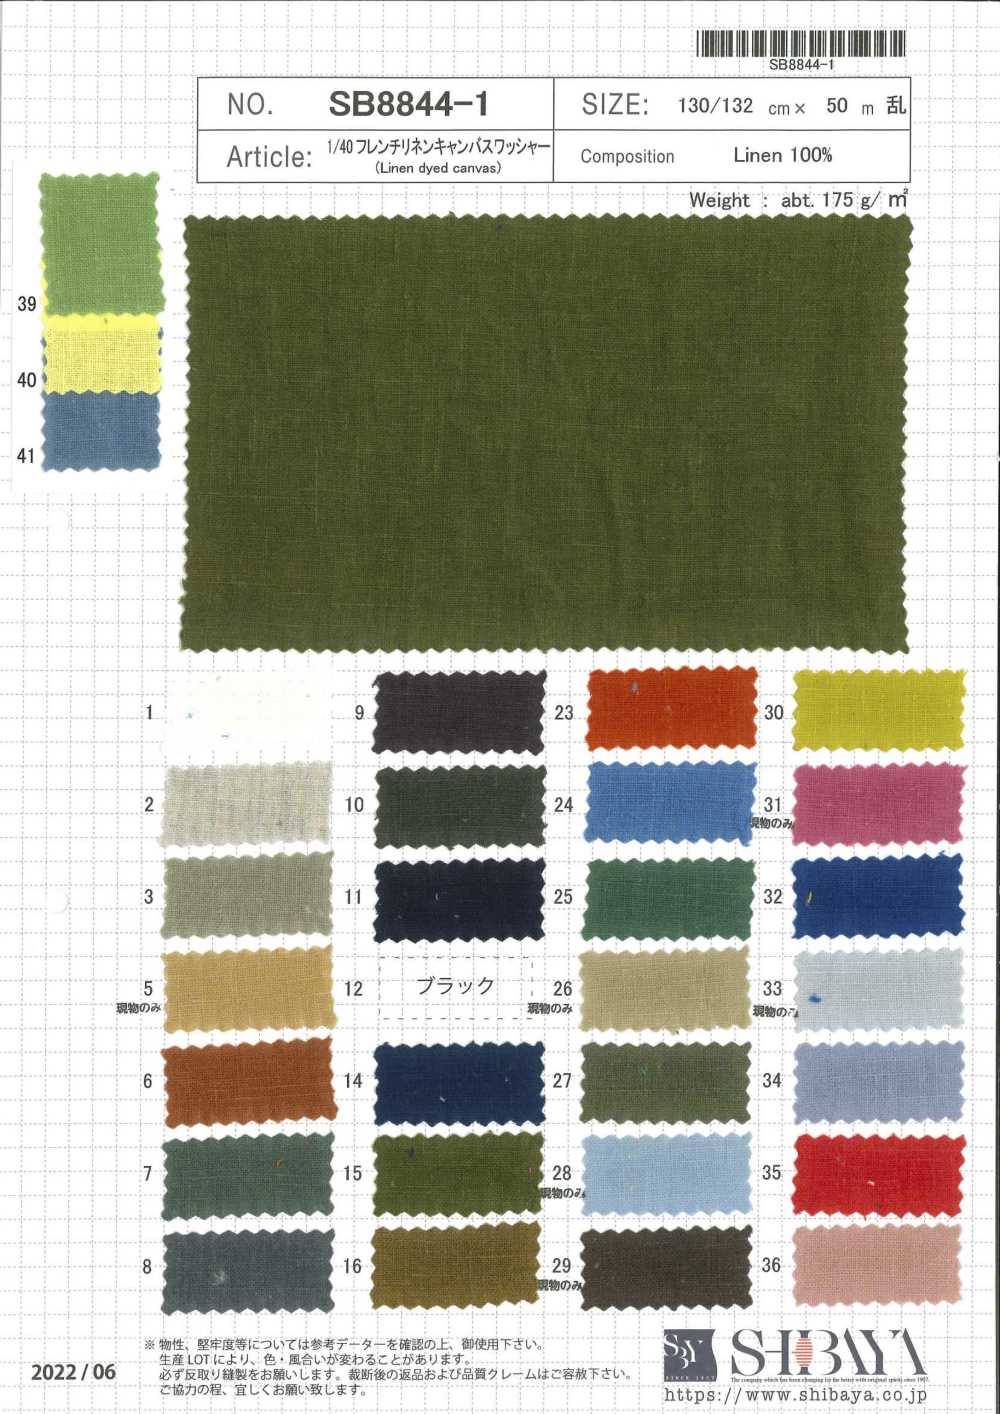 SB8844-1 1/40 French Linen Canvas Washer Verarbeitung[Textilgewebe] SHIBAYA